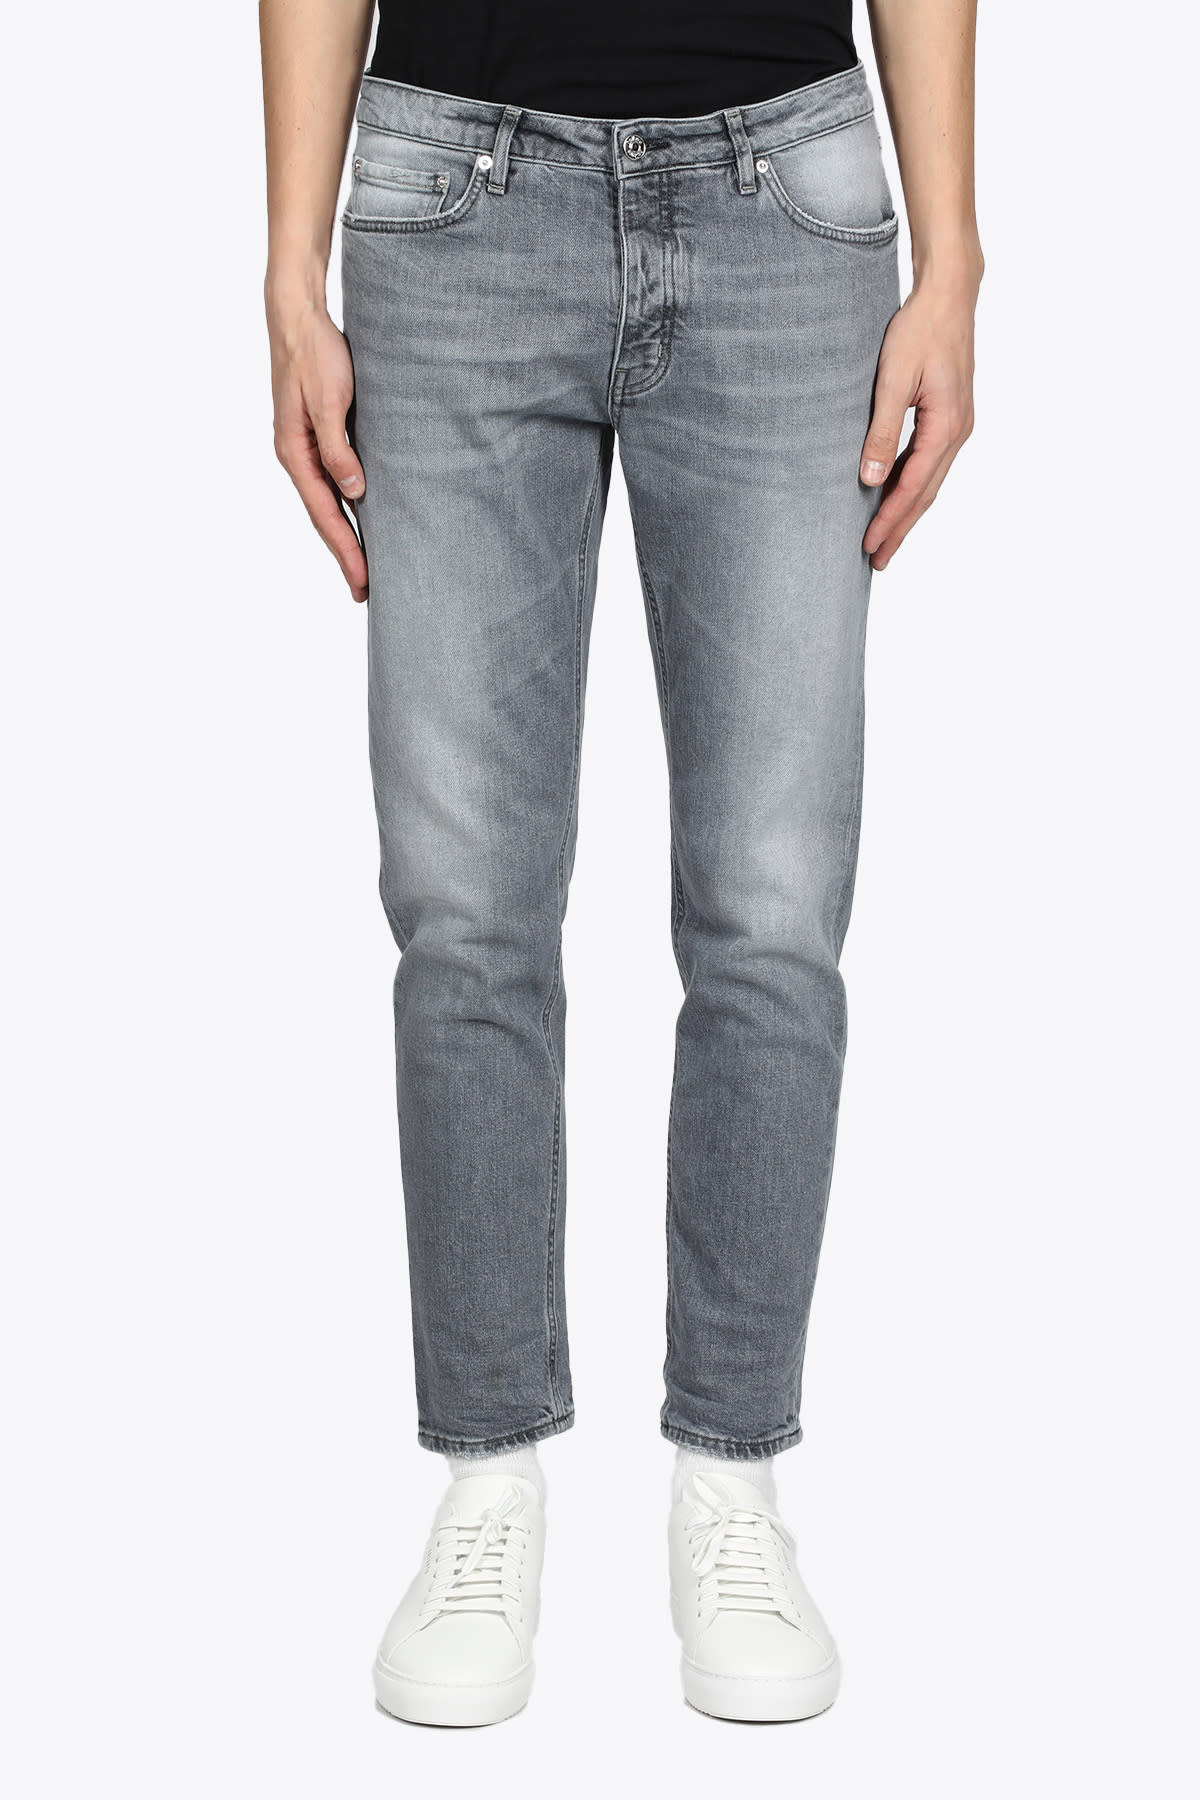 Haikure Cleveland Crop Comfort Pure Black Pure Sanded grey slim fit jeans - Cleveland crop